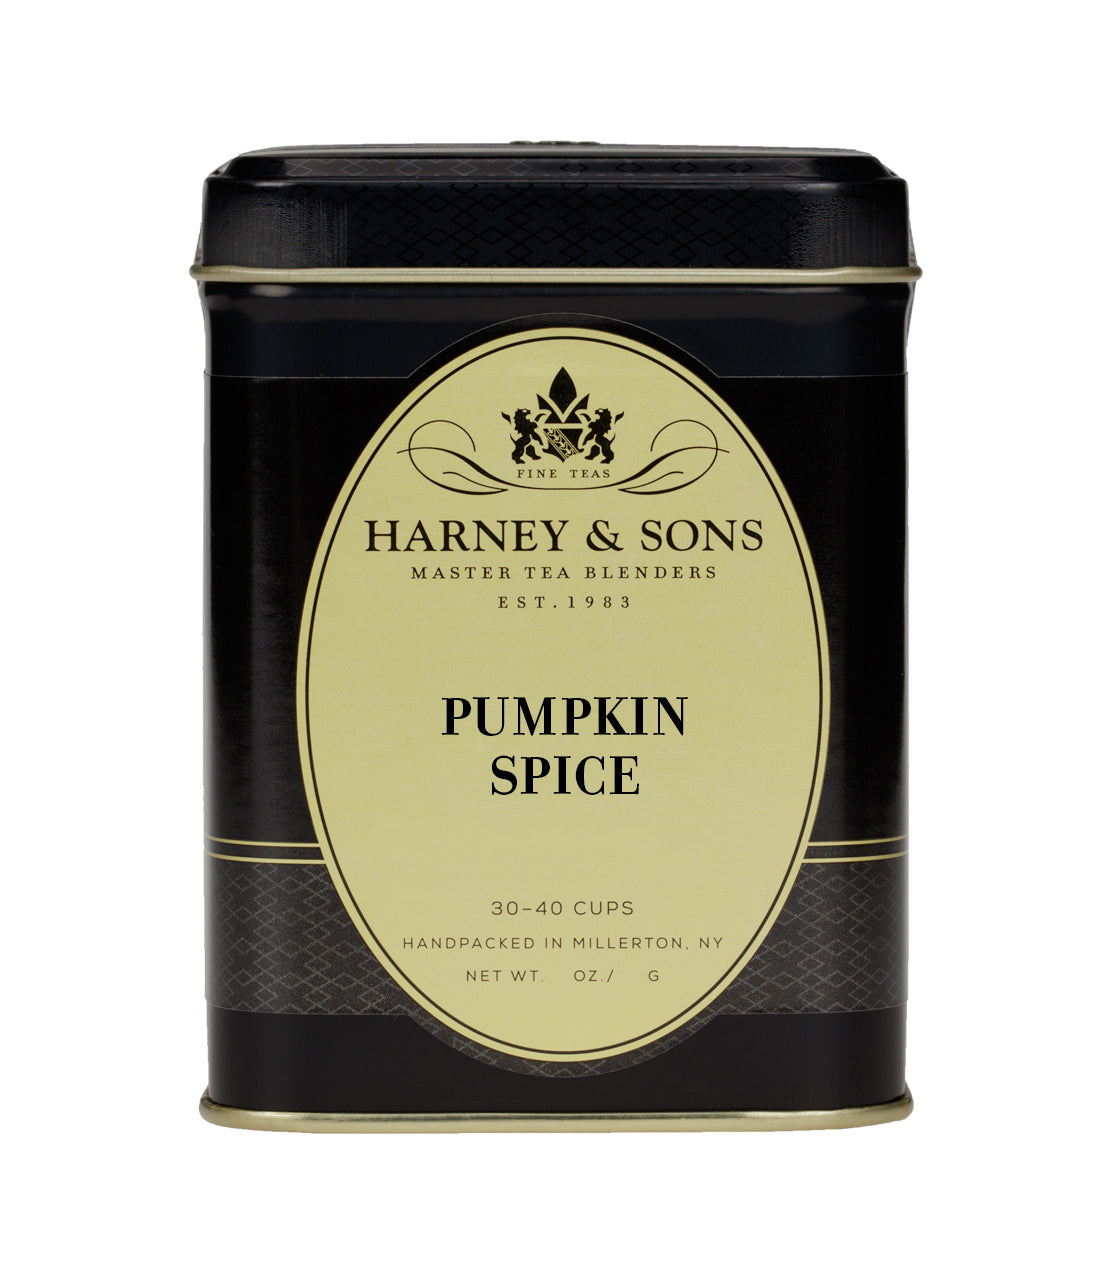 Pumpkin Spice - Loose 4 oz. Tin - Harney & Sons Fine Teas